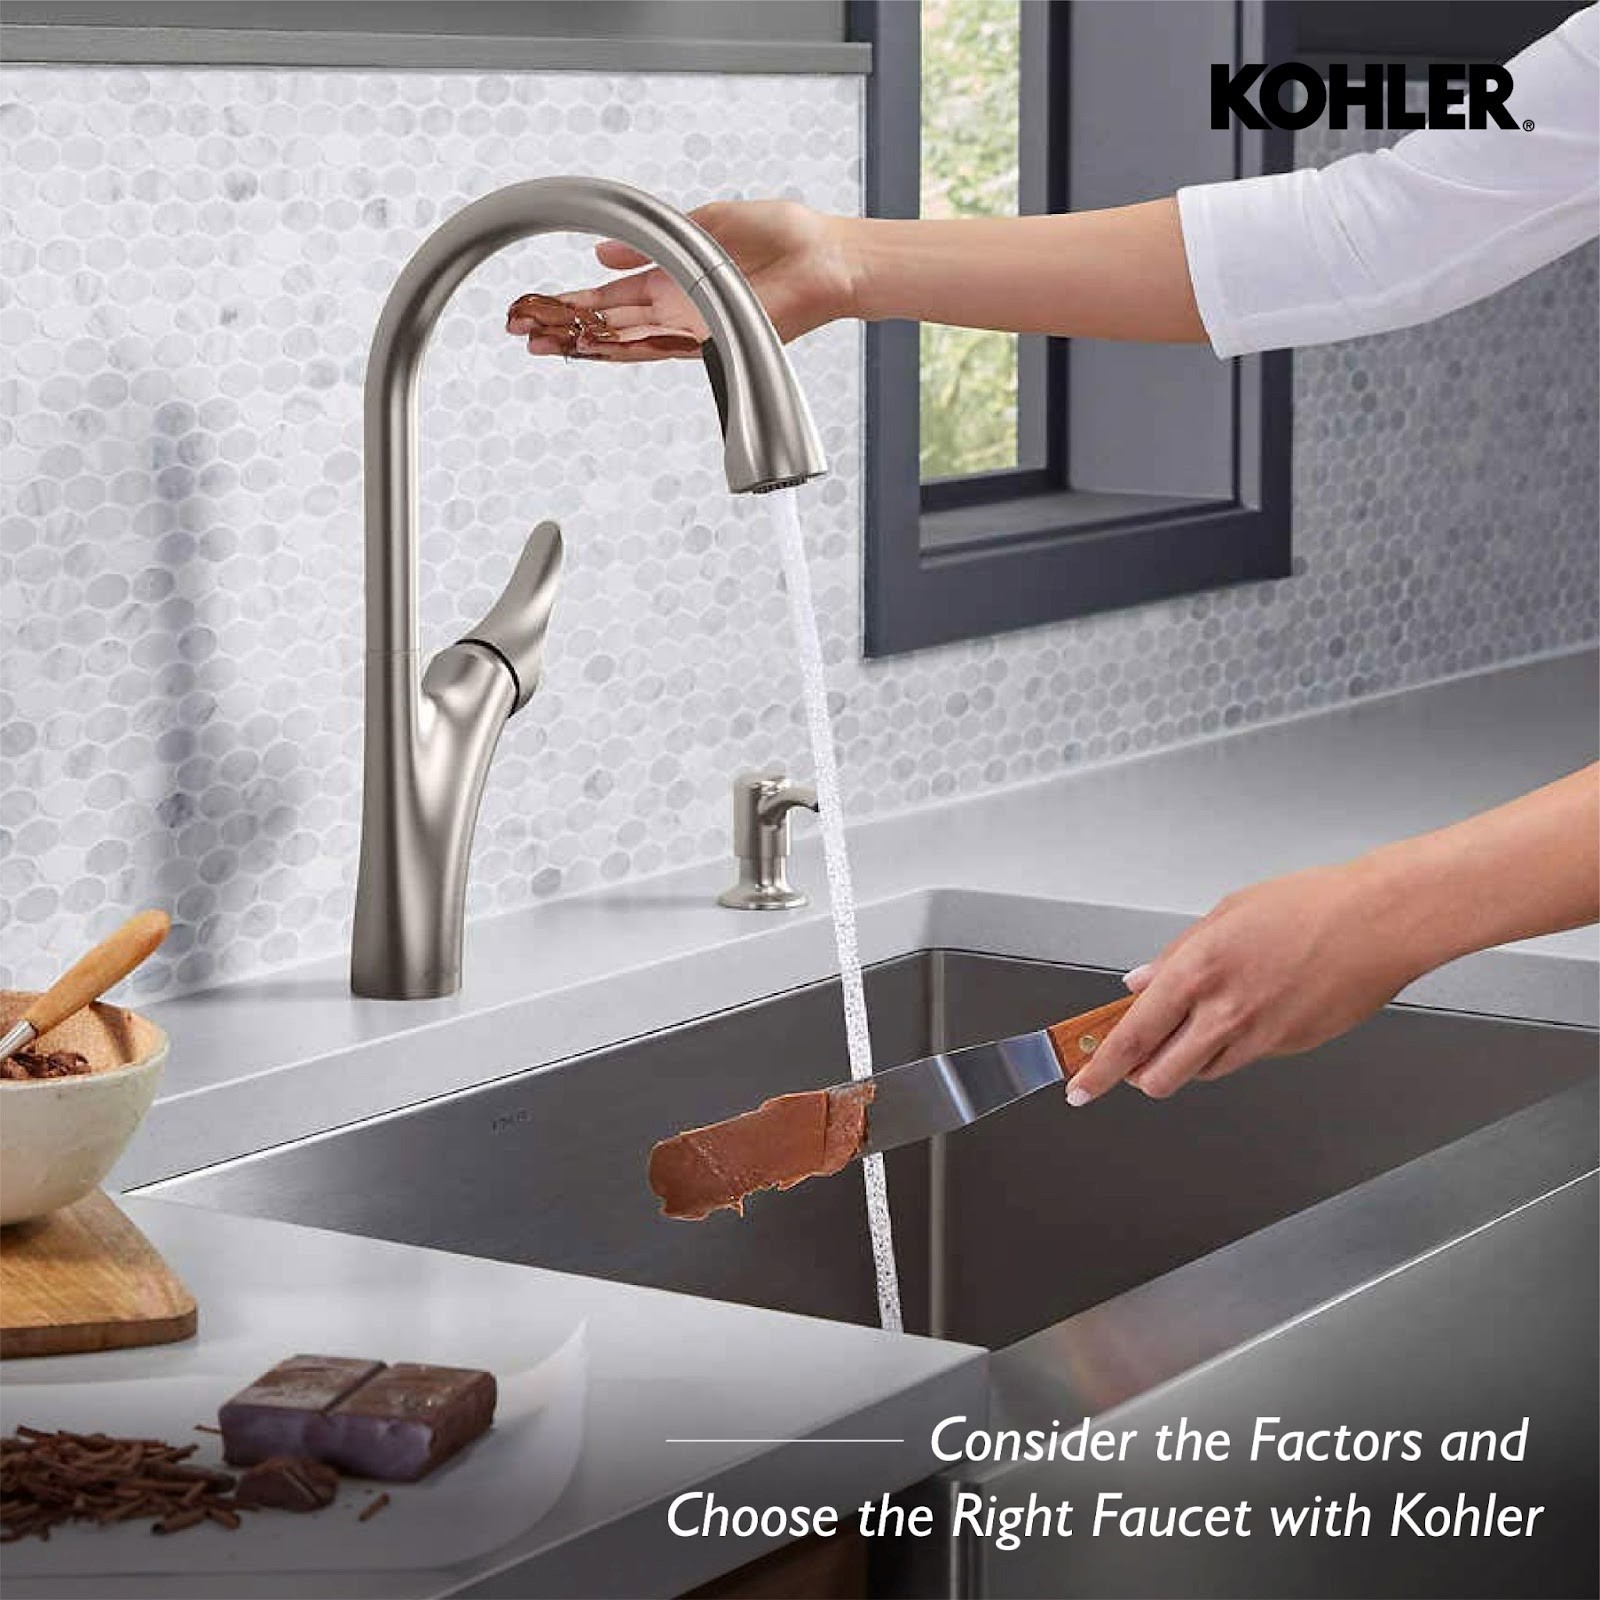 Kohler kitchen faucets